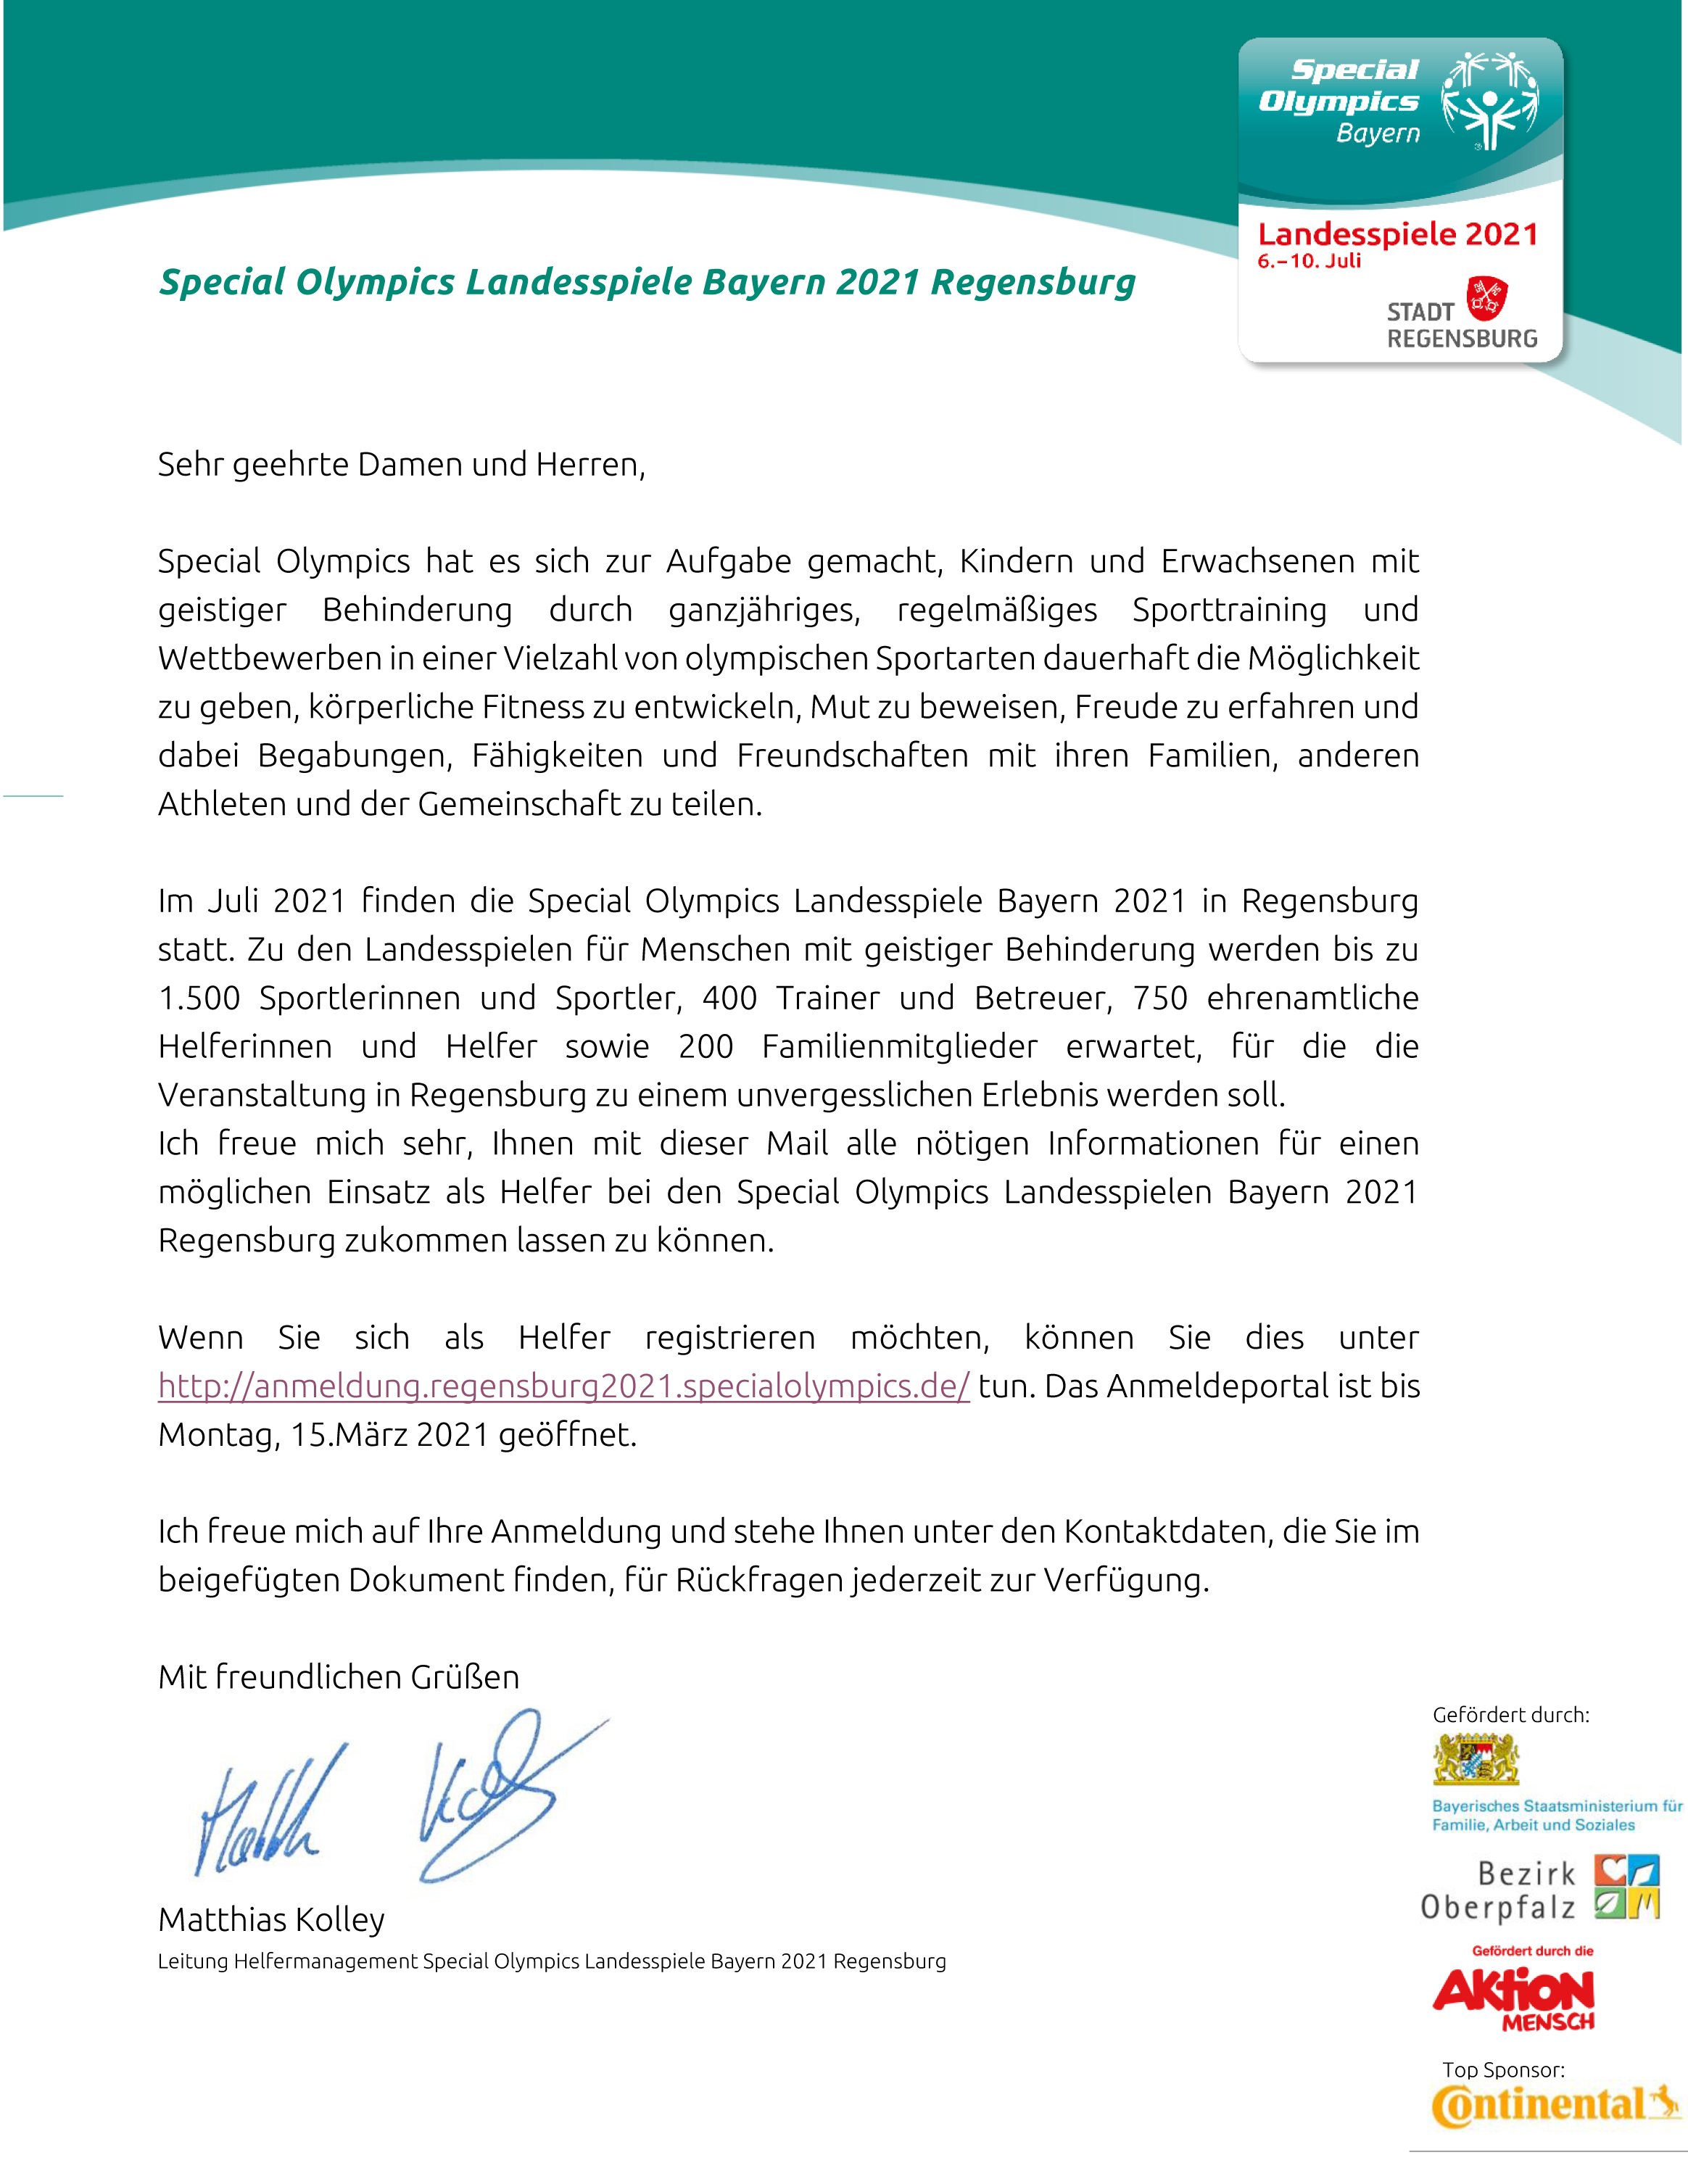 Special Olympics Landesspiele Bayern 2021 Regensburg